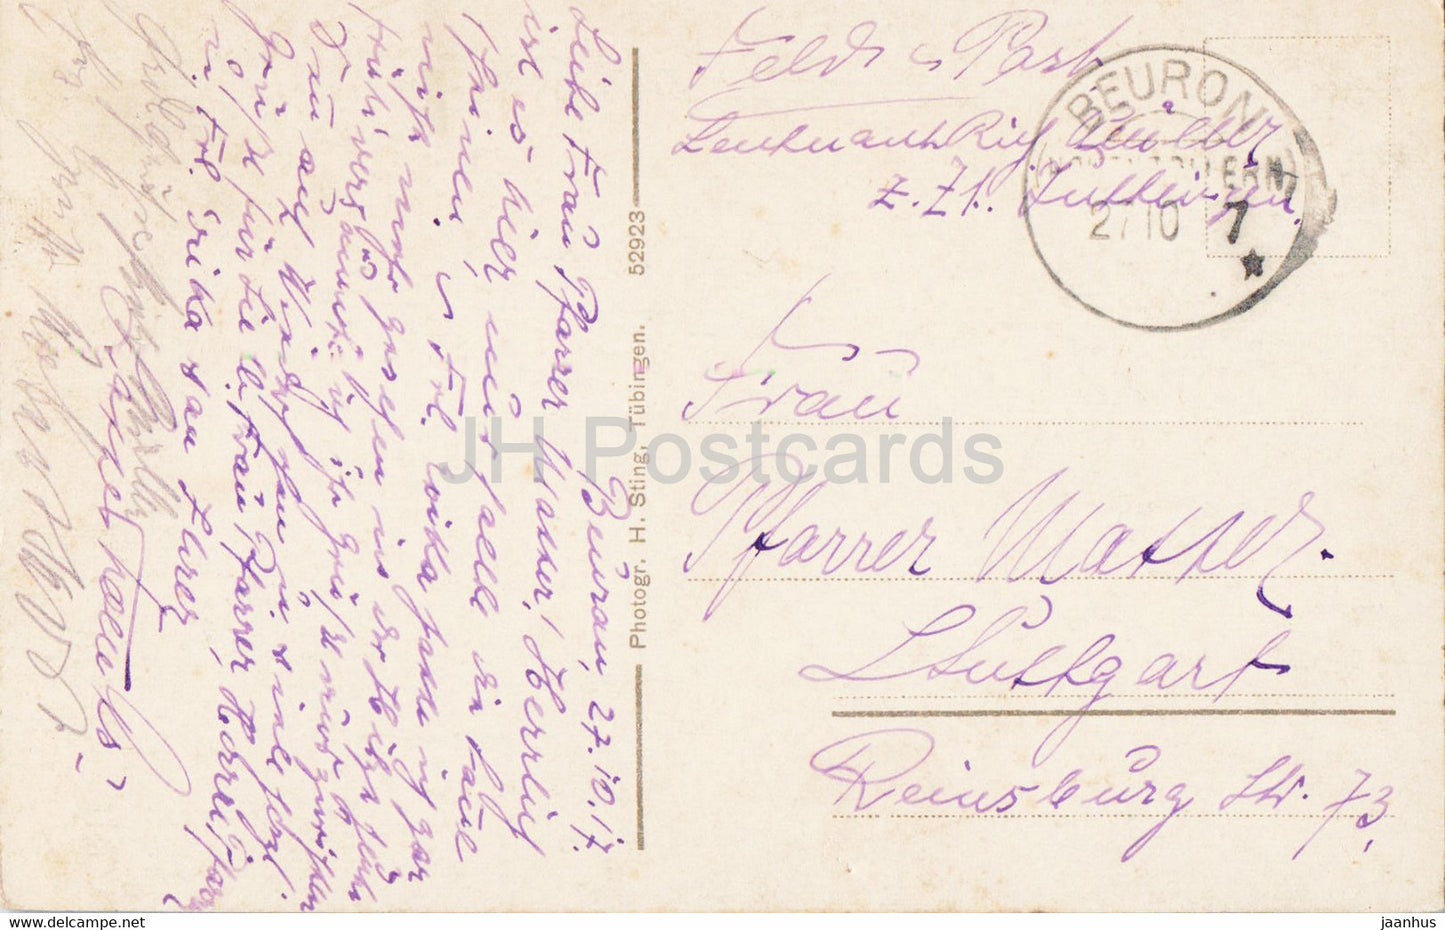 Donautal - Schloss Bronnen 788 m mit Blick auf Irrendorf - Feldpost - military mail old postcard - 1917 - Germany - used